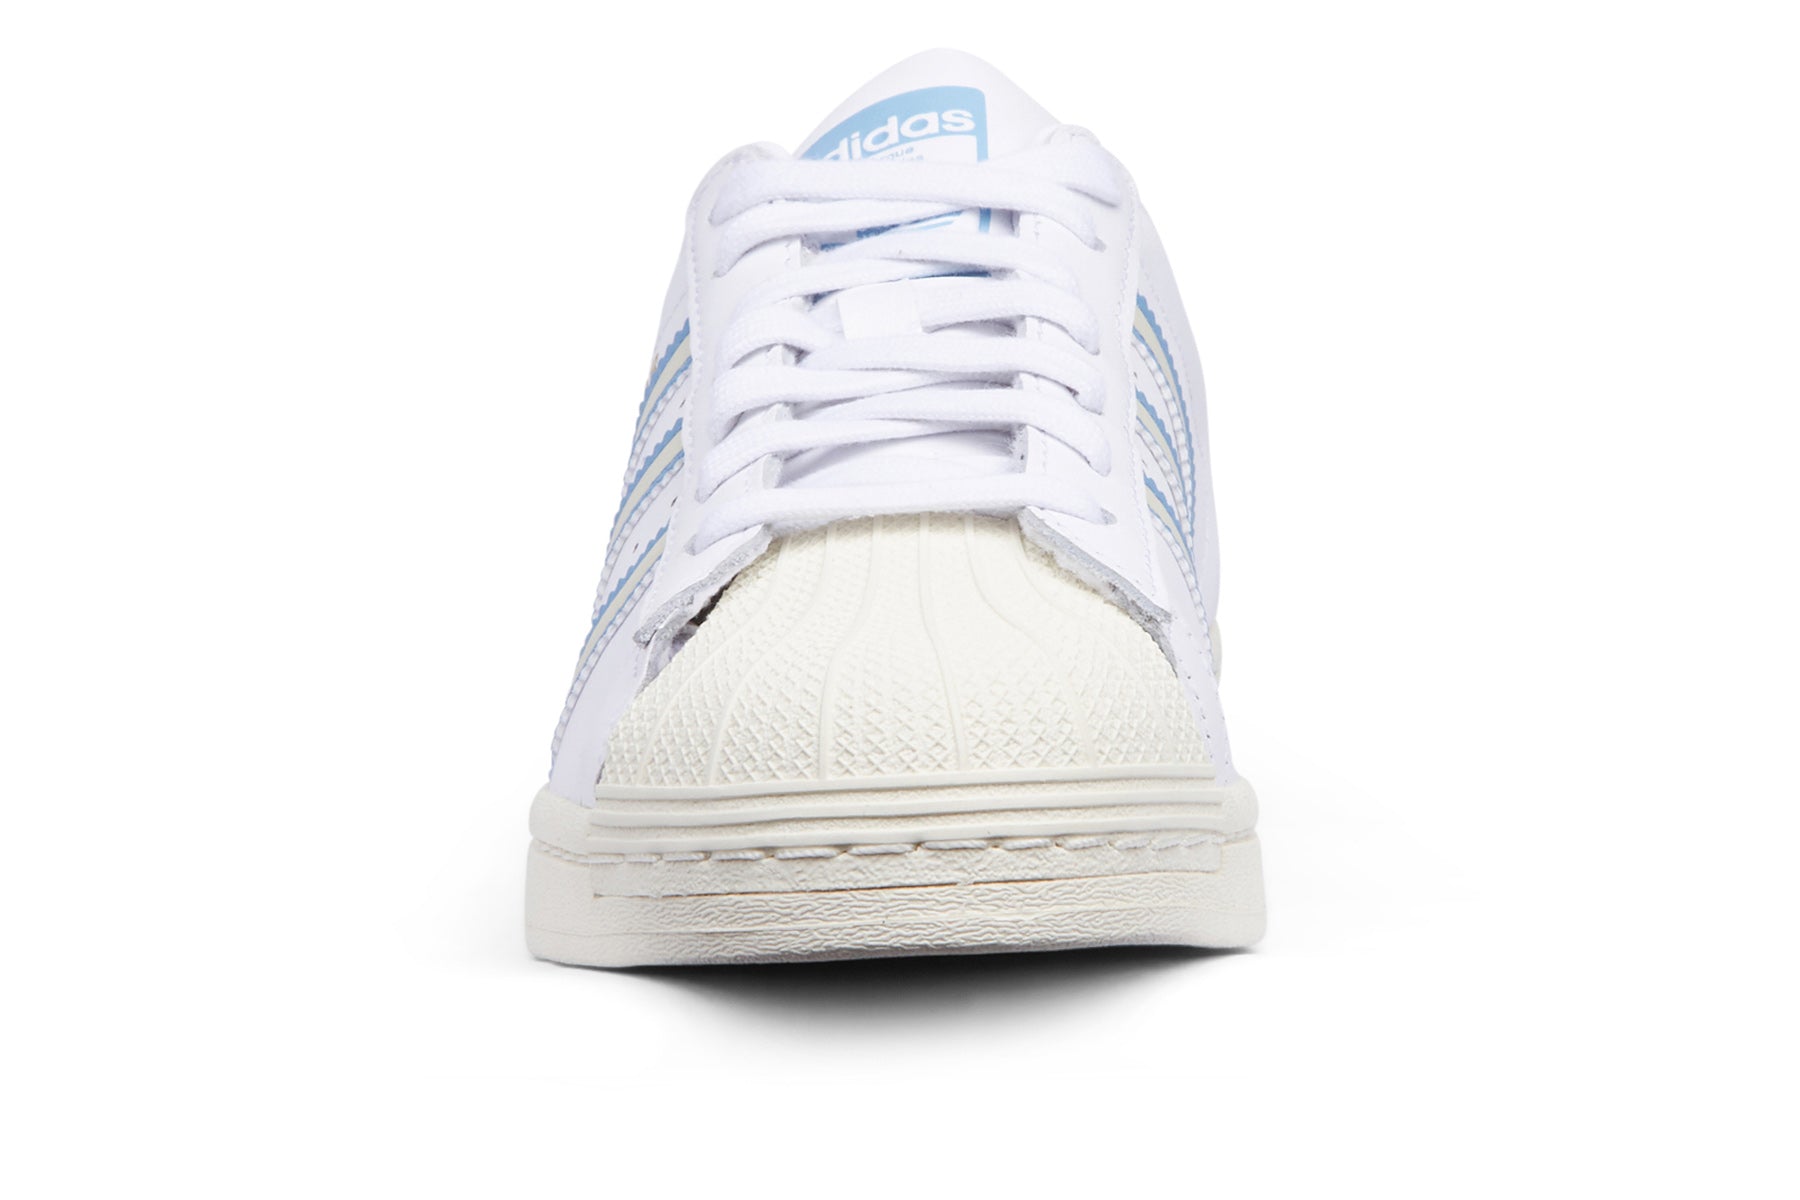 Adidas Superstar - FTWR White/Off White/Light Blue